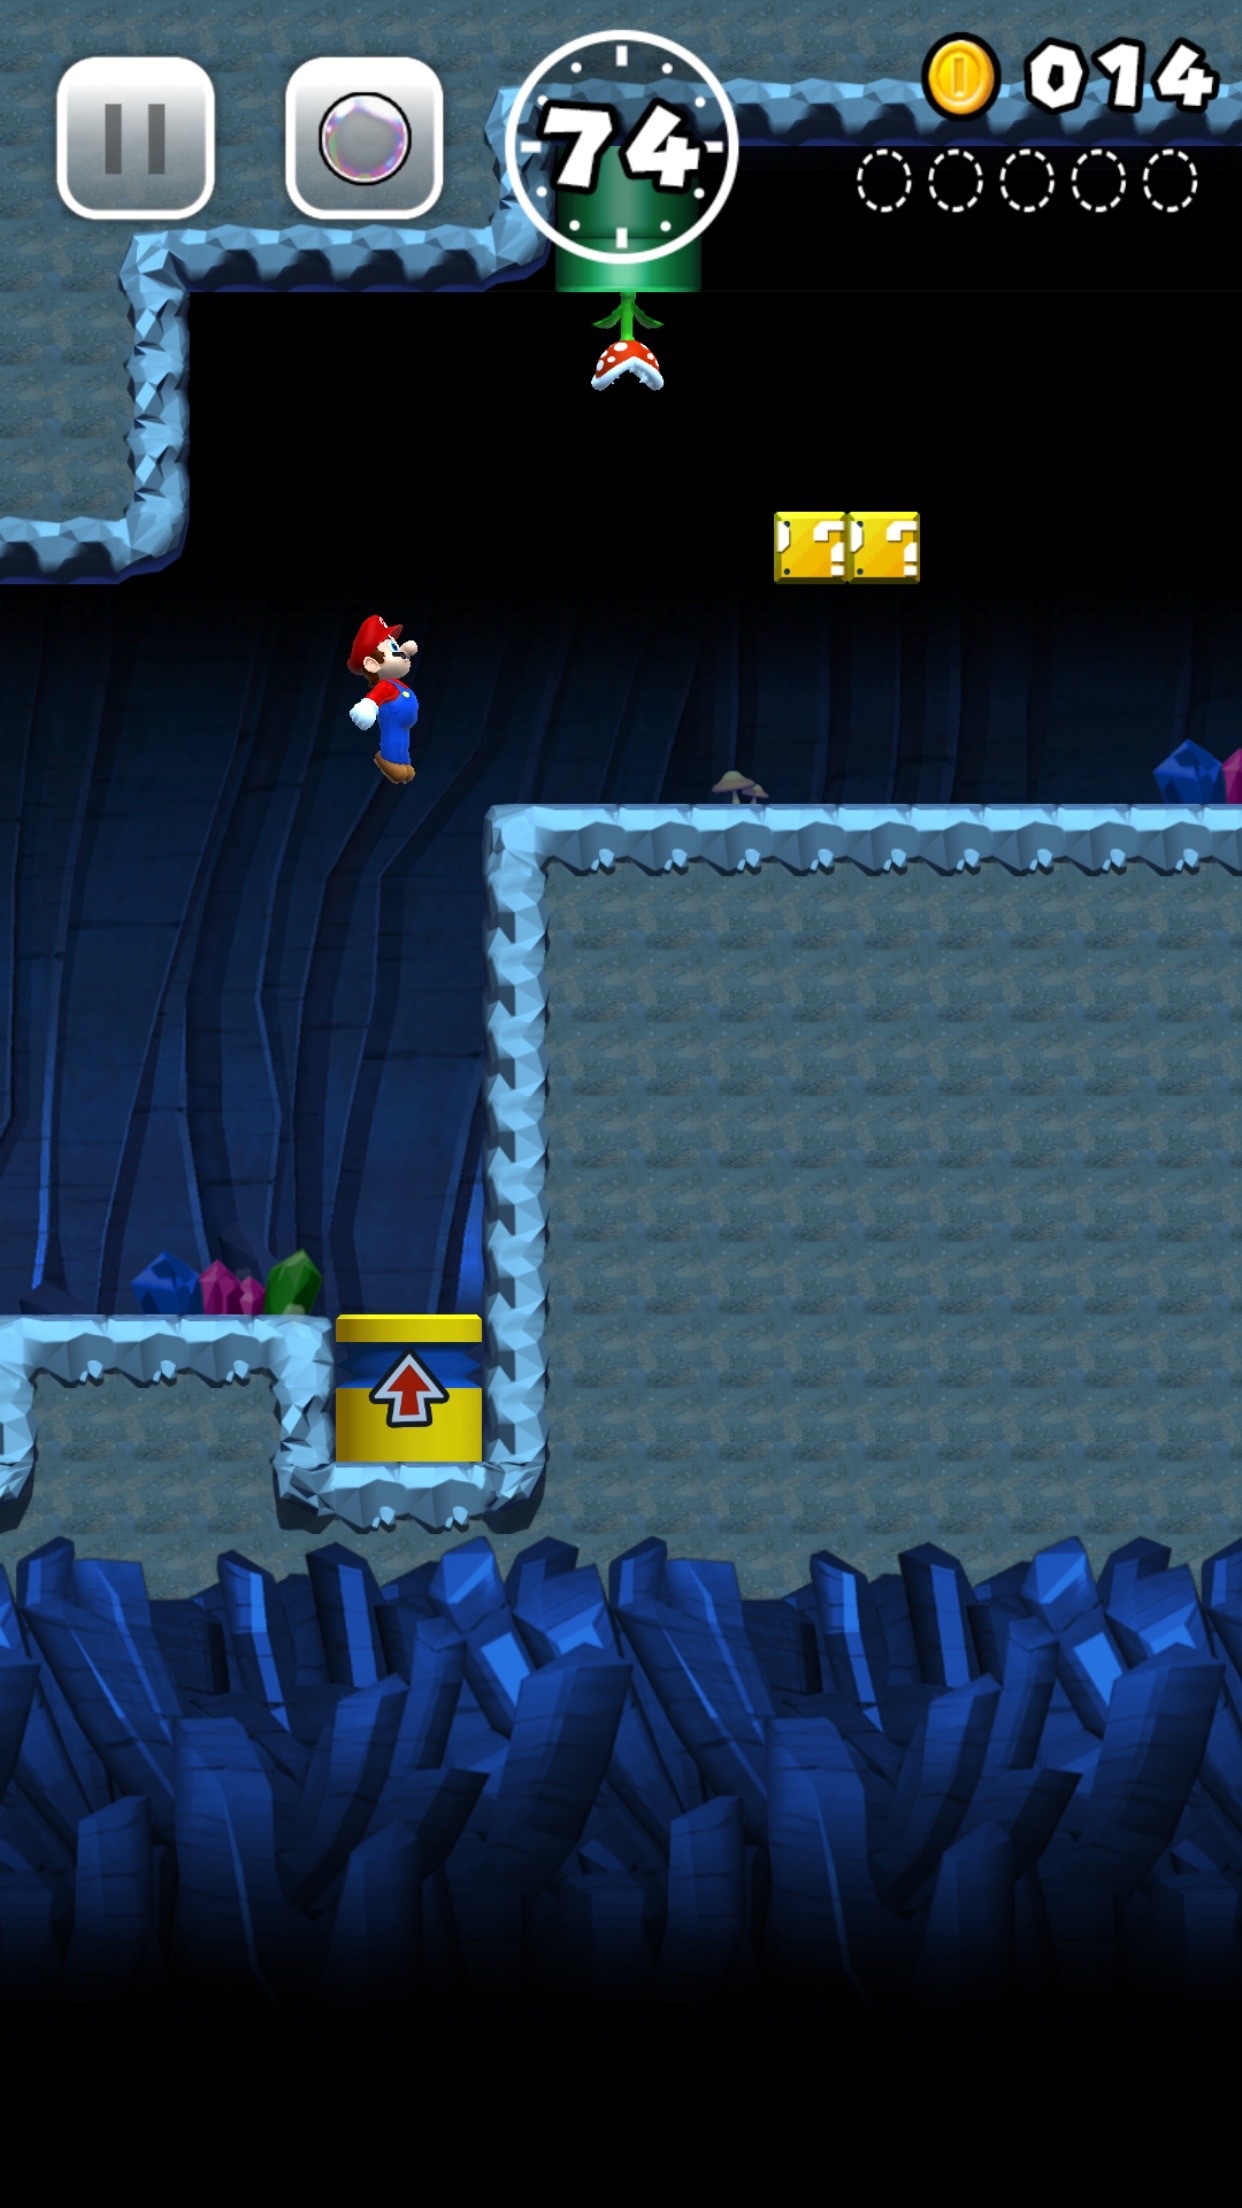 Super Mario Run Coming iPhone & iPad This December | Business